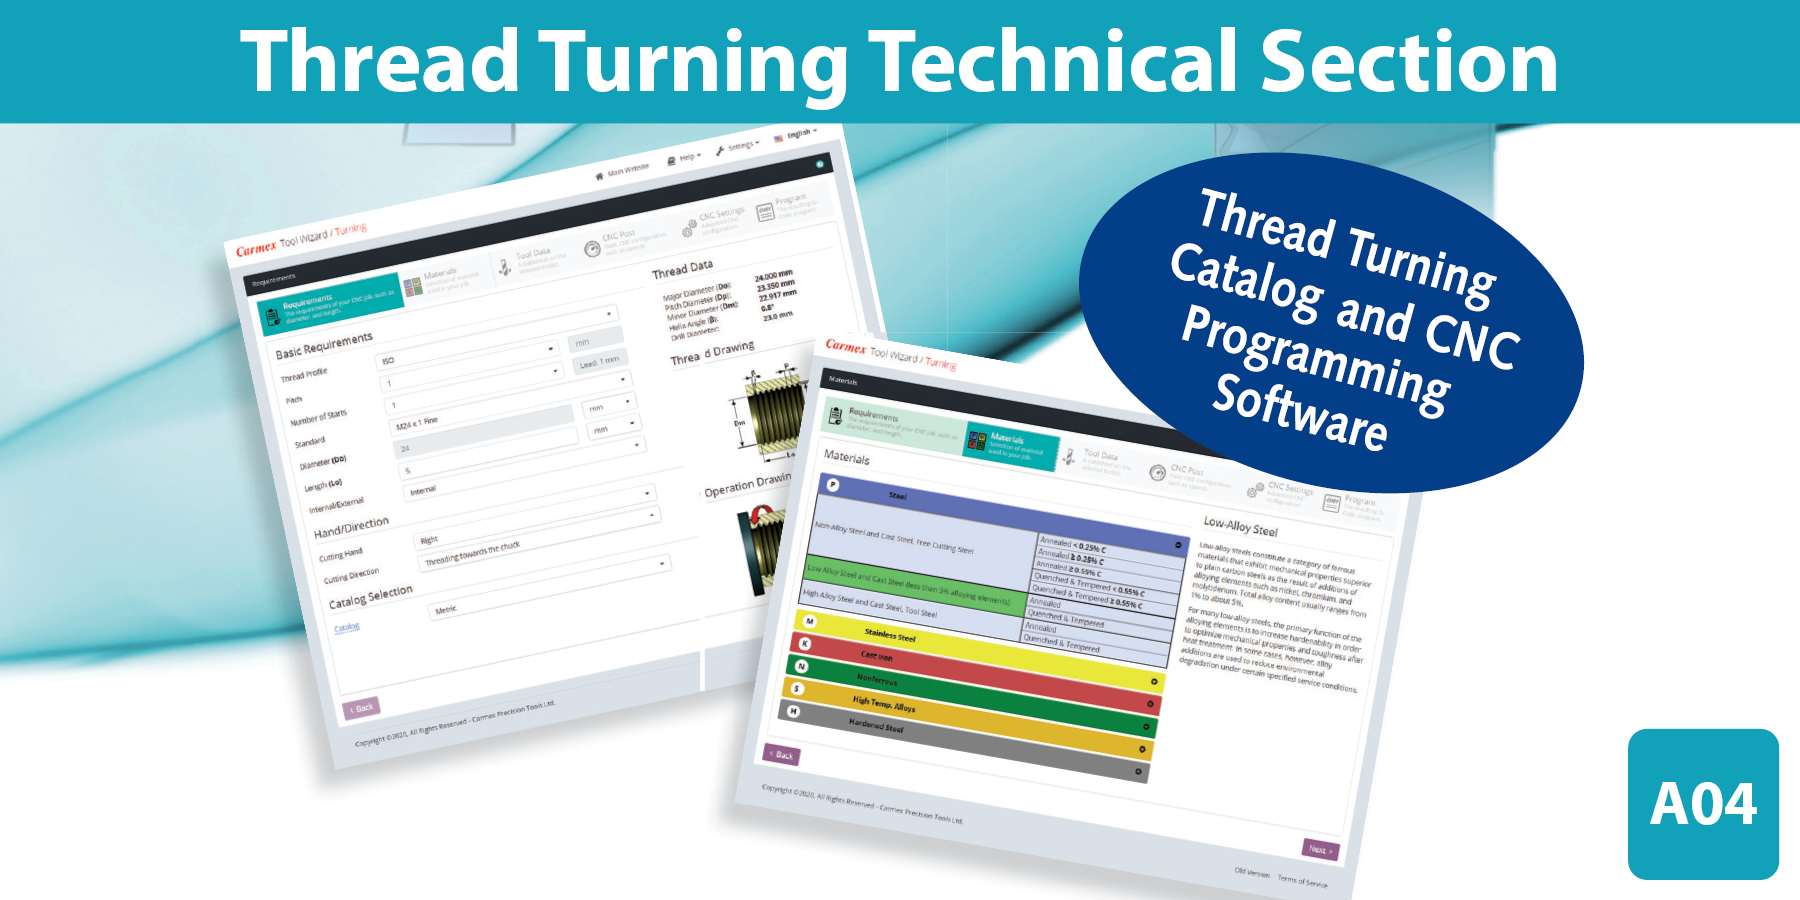 A04_Thread_Turning_Technical